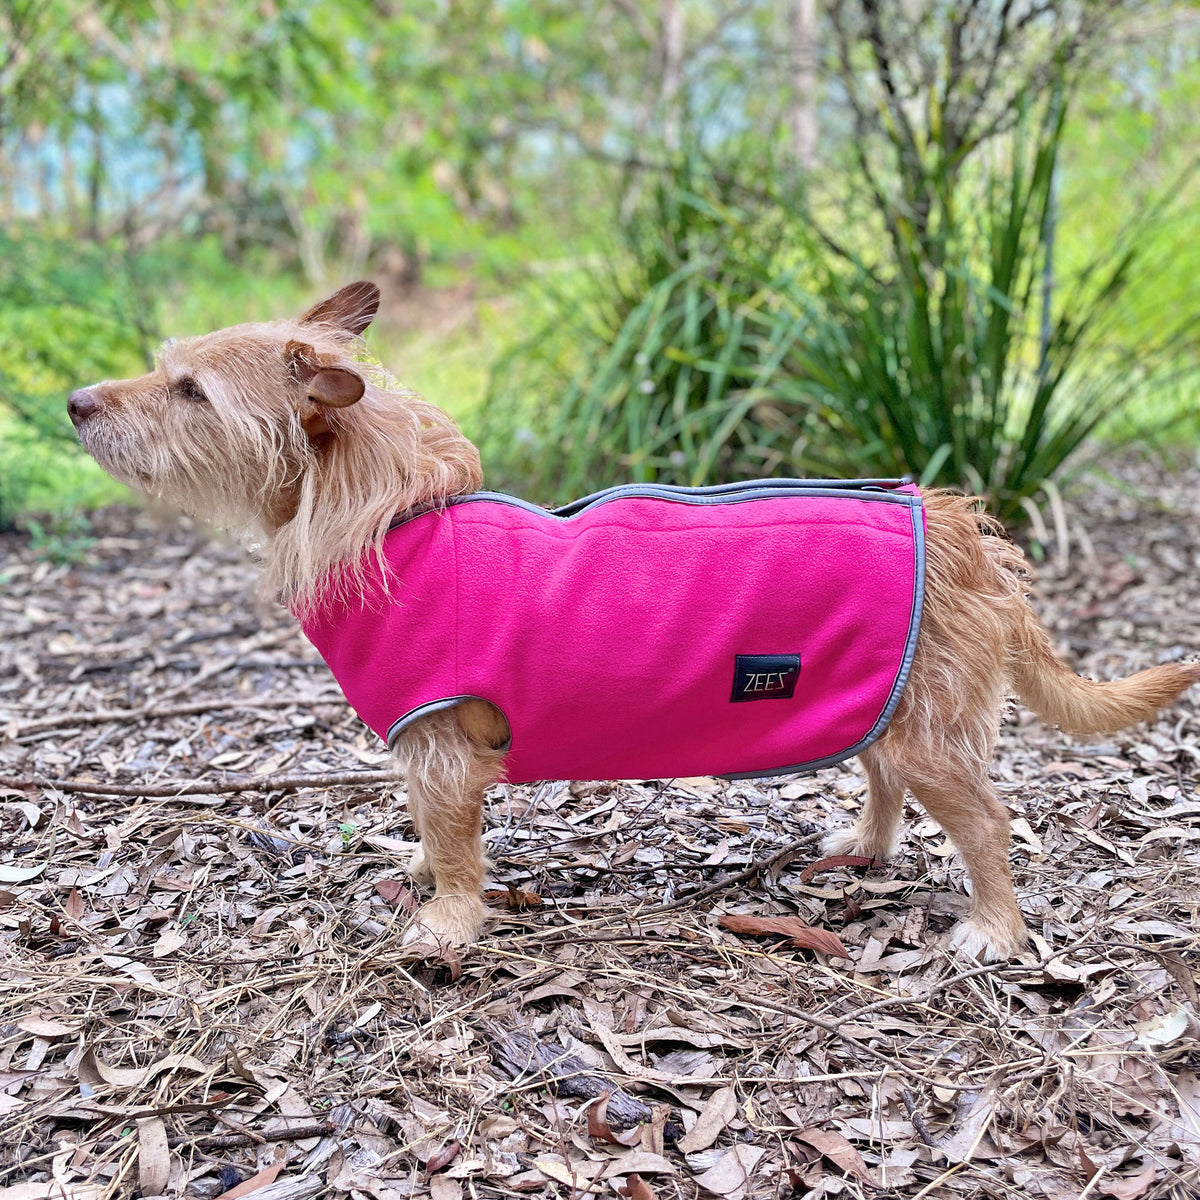 ZeeZ Cozy Fleece Dog Vest - Ruby Pink